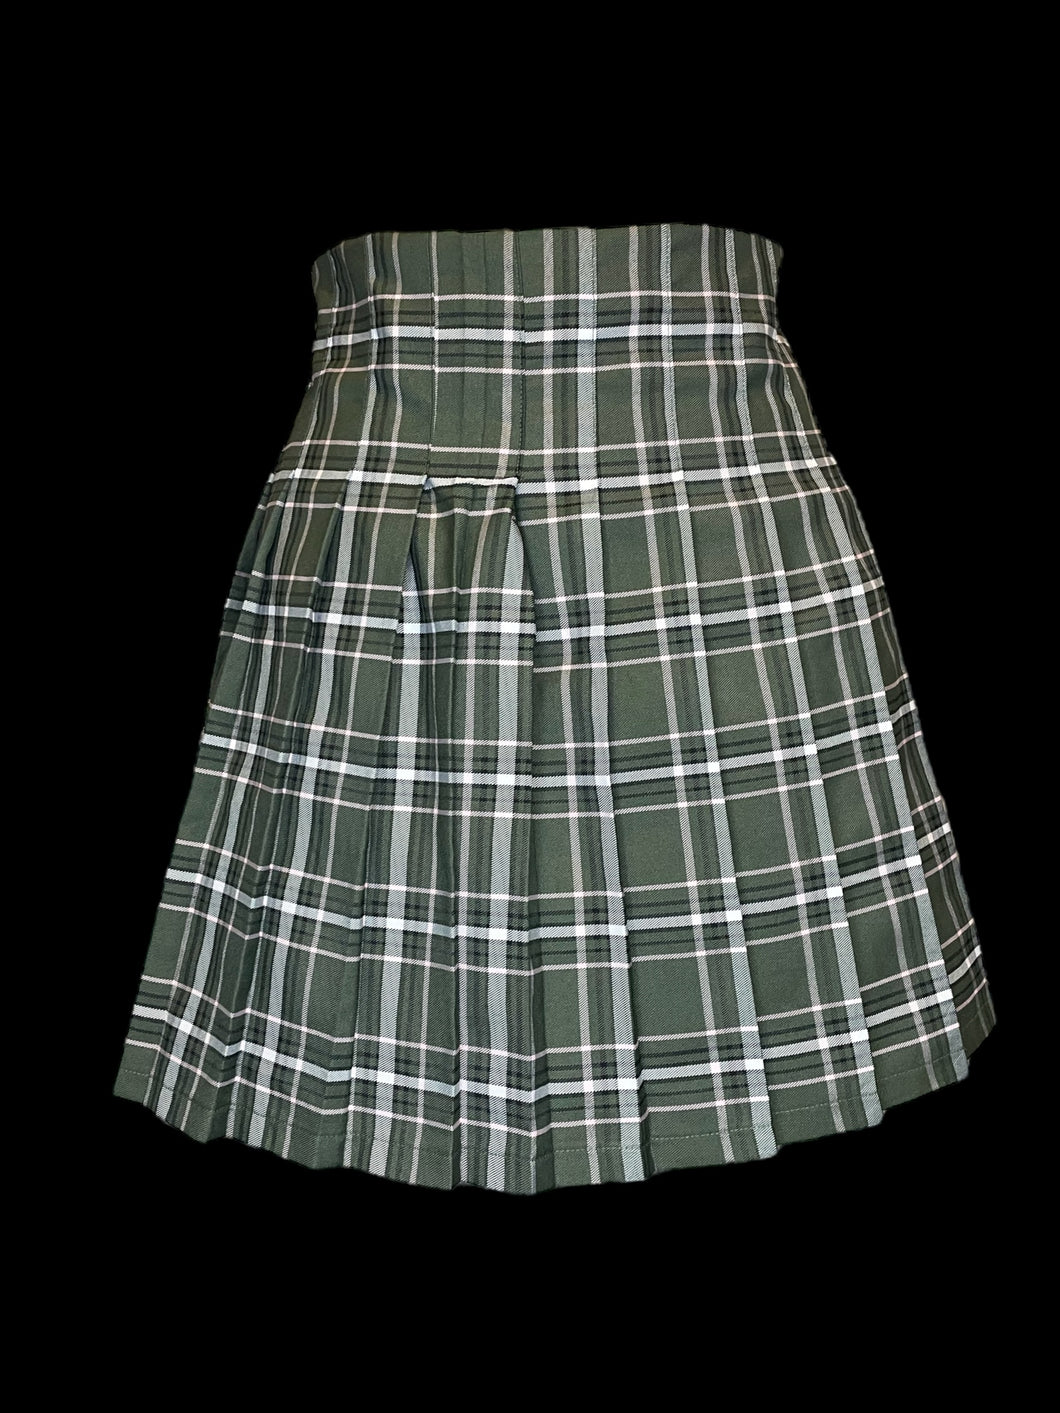 XL Olive green, white, pink, & black plaid pleated mini skirt w/ side zipper closure